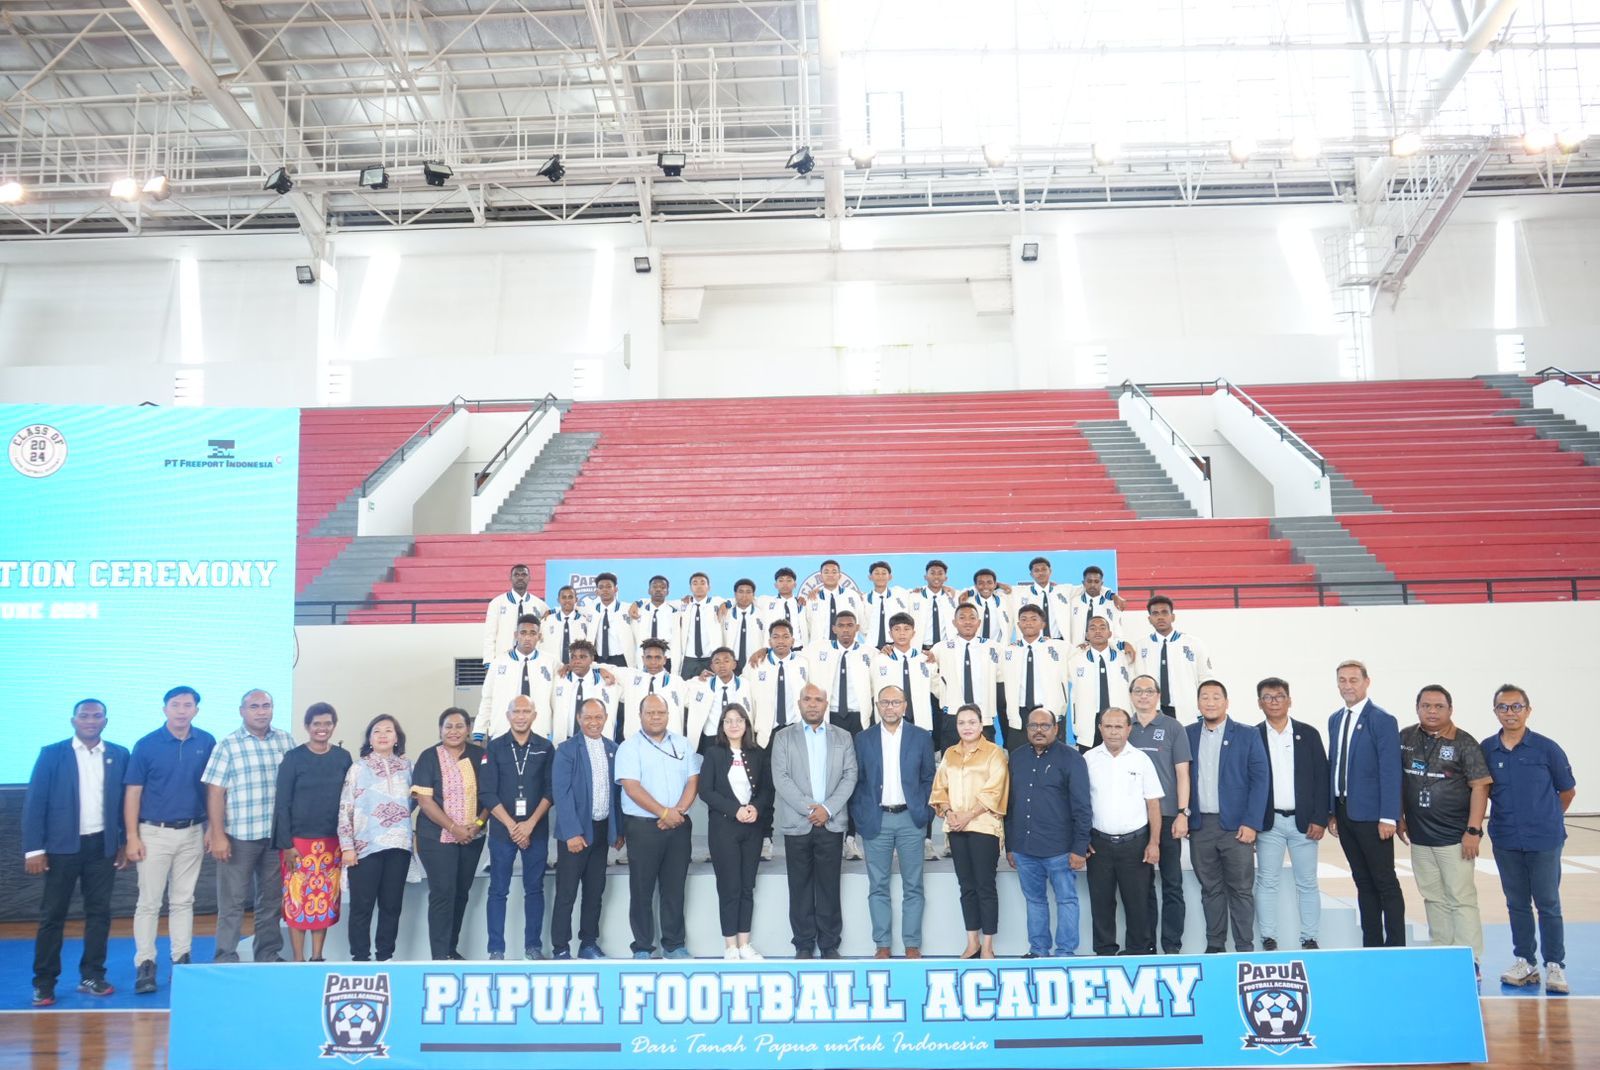 Foto bersama anak -anak berbakat asal Papua di dunia sepakbola angkatan pertama Papua Football Academy di acara kelulusan bersama pihak PT Freeport Indonesia dan pihak PSSI yang di hadiri langsung oleh Ibu Ratu T